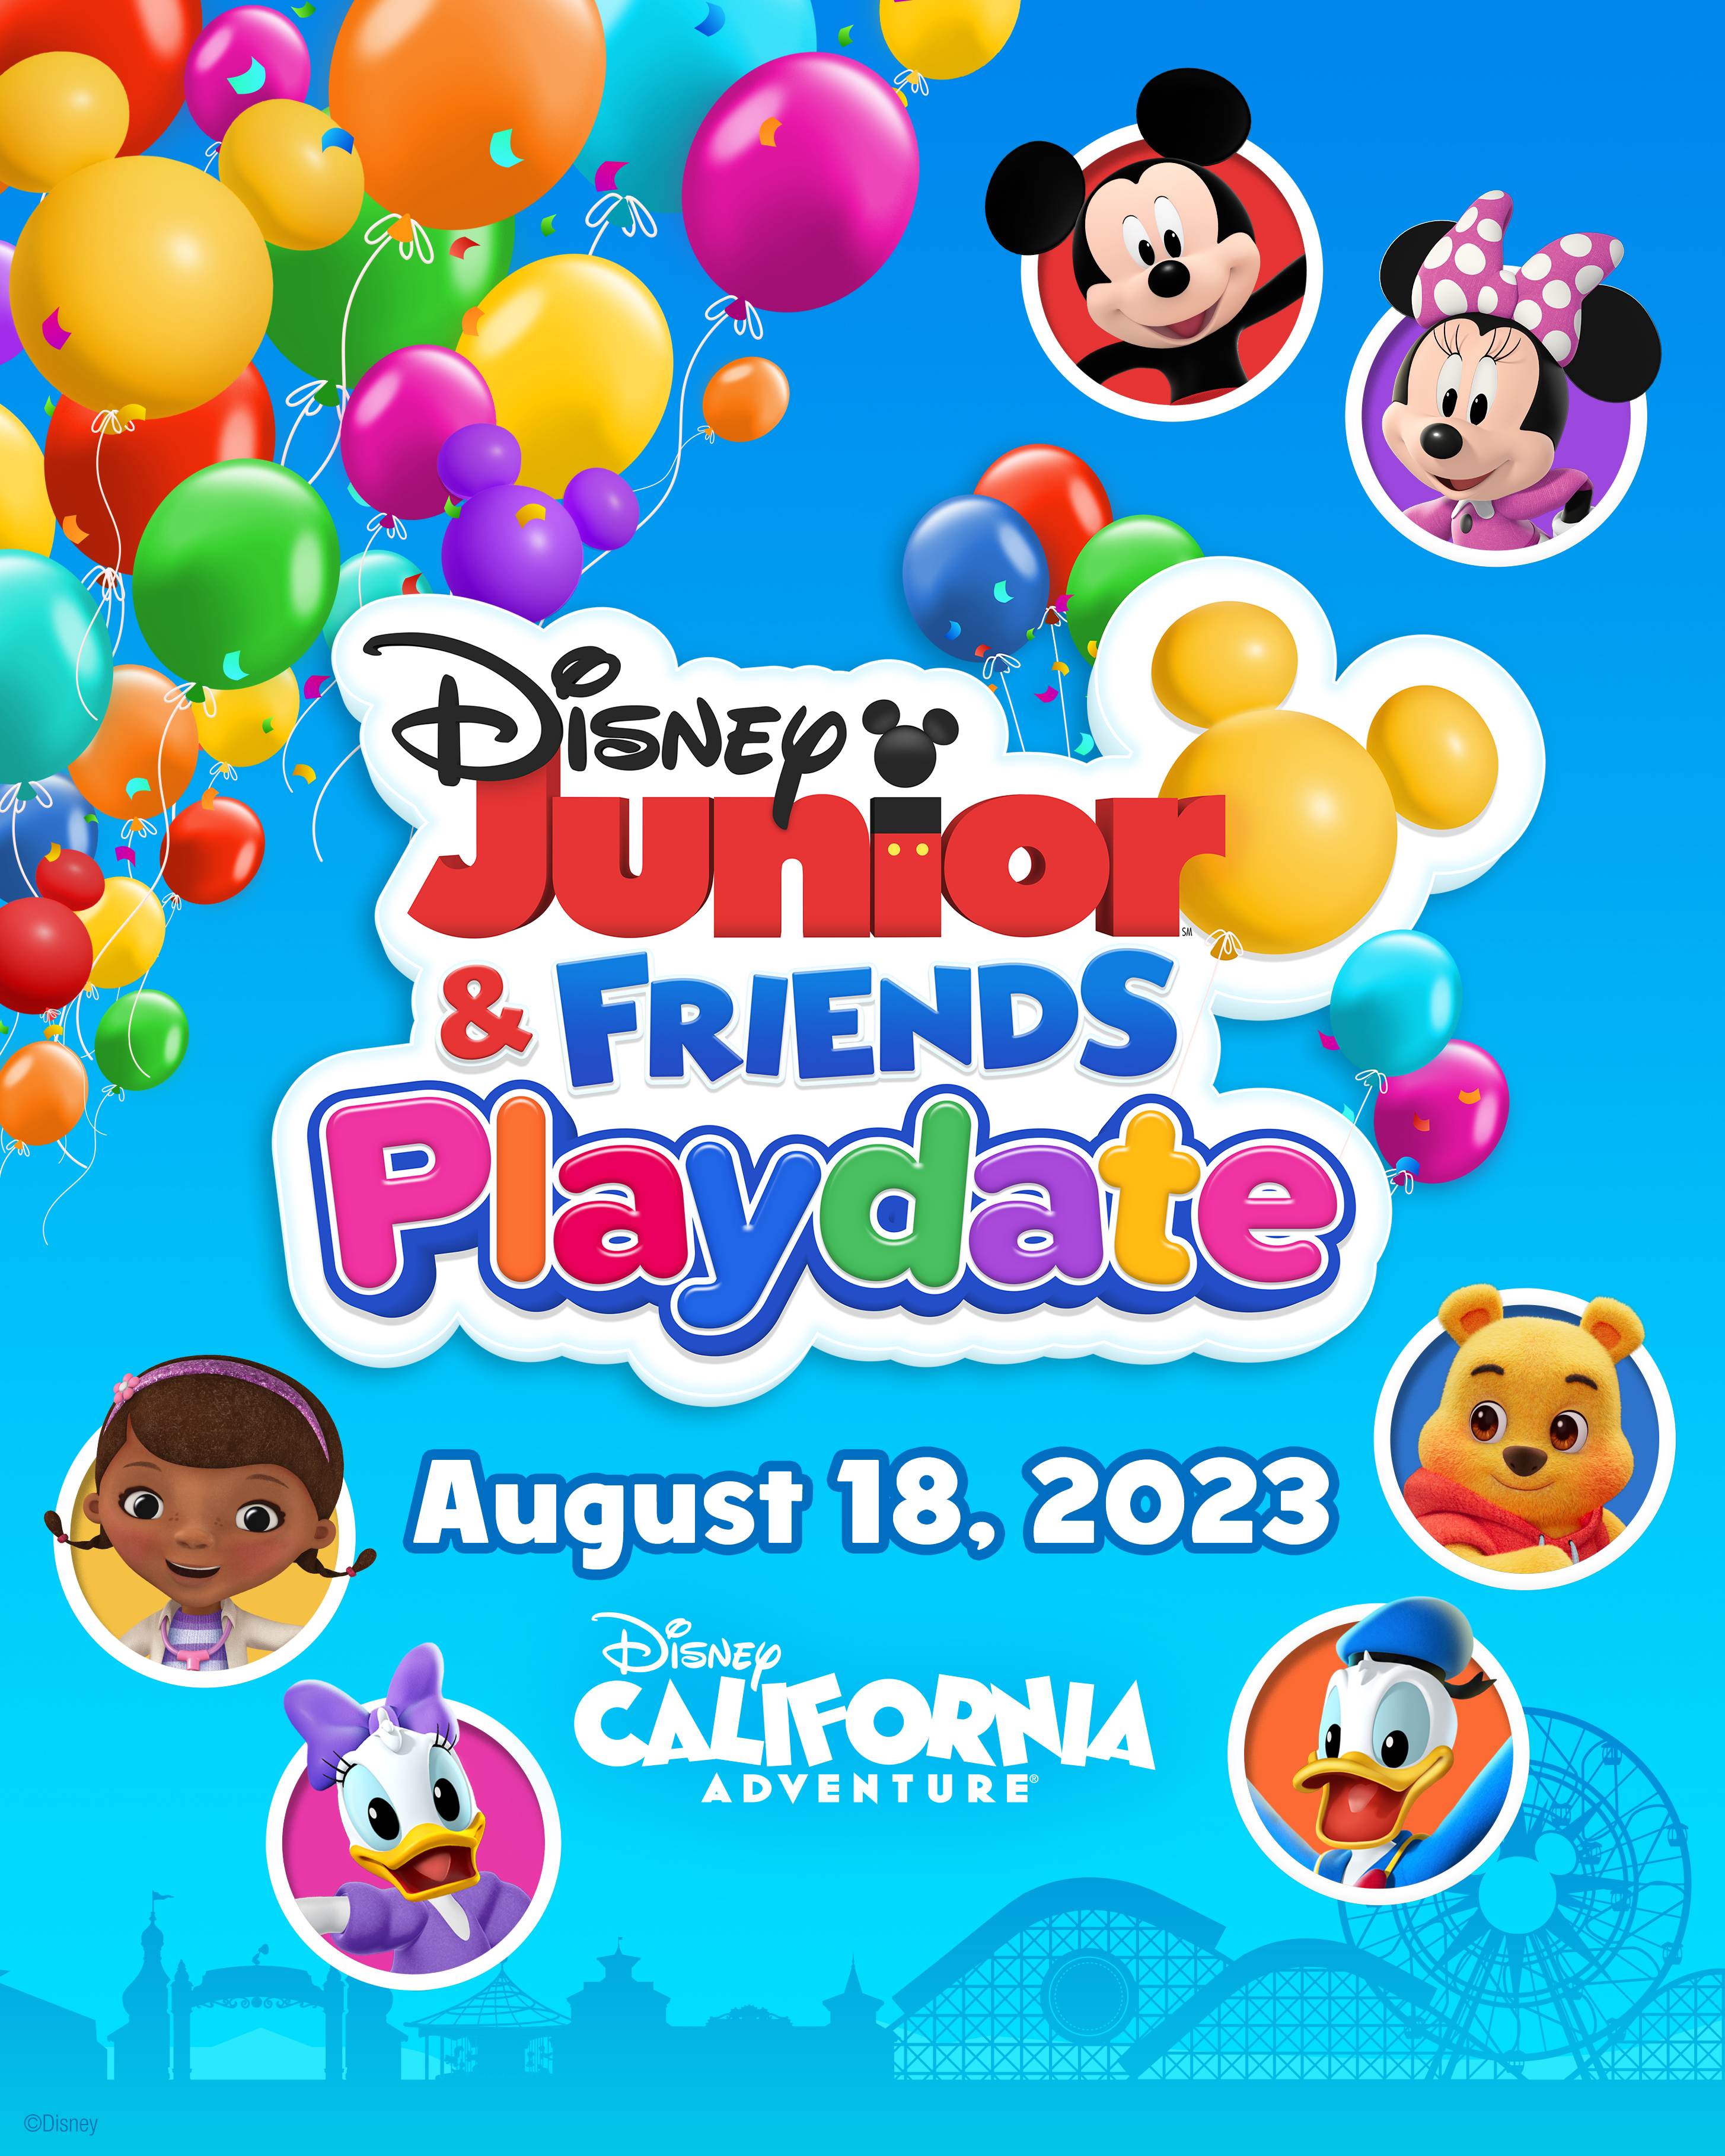 Disney Junior on X: Disney Junior & Friends Playdate is coming to